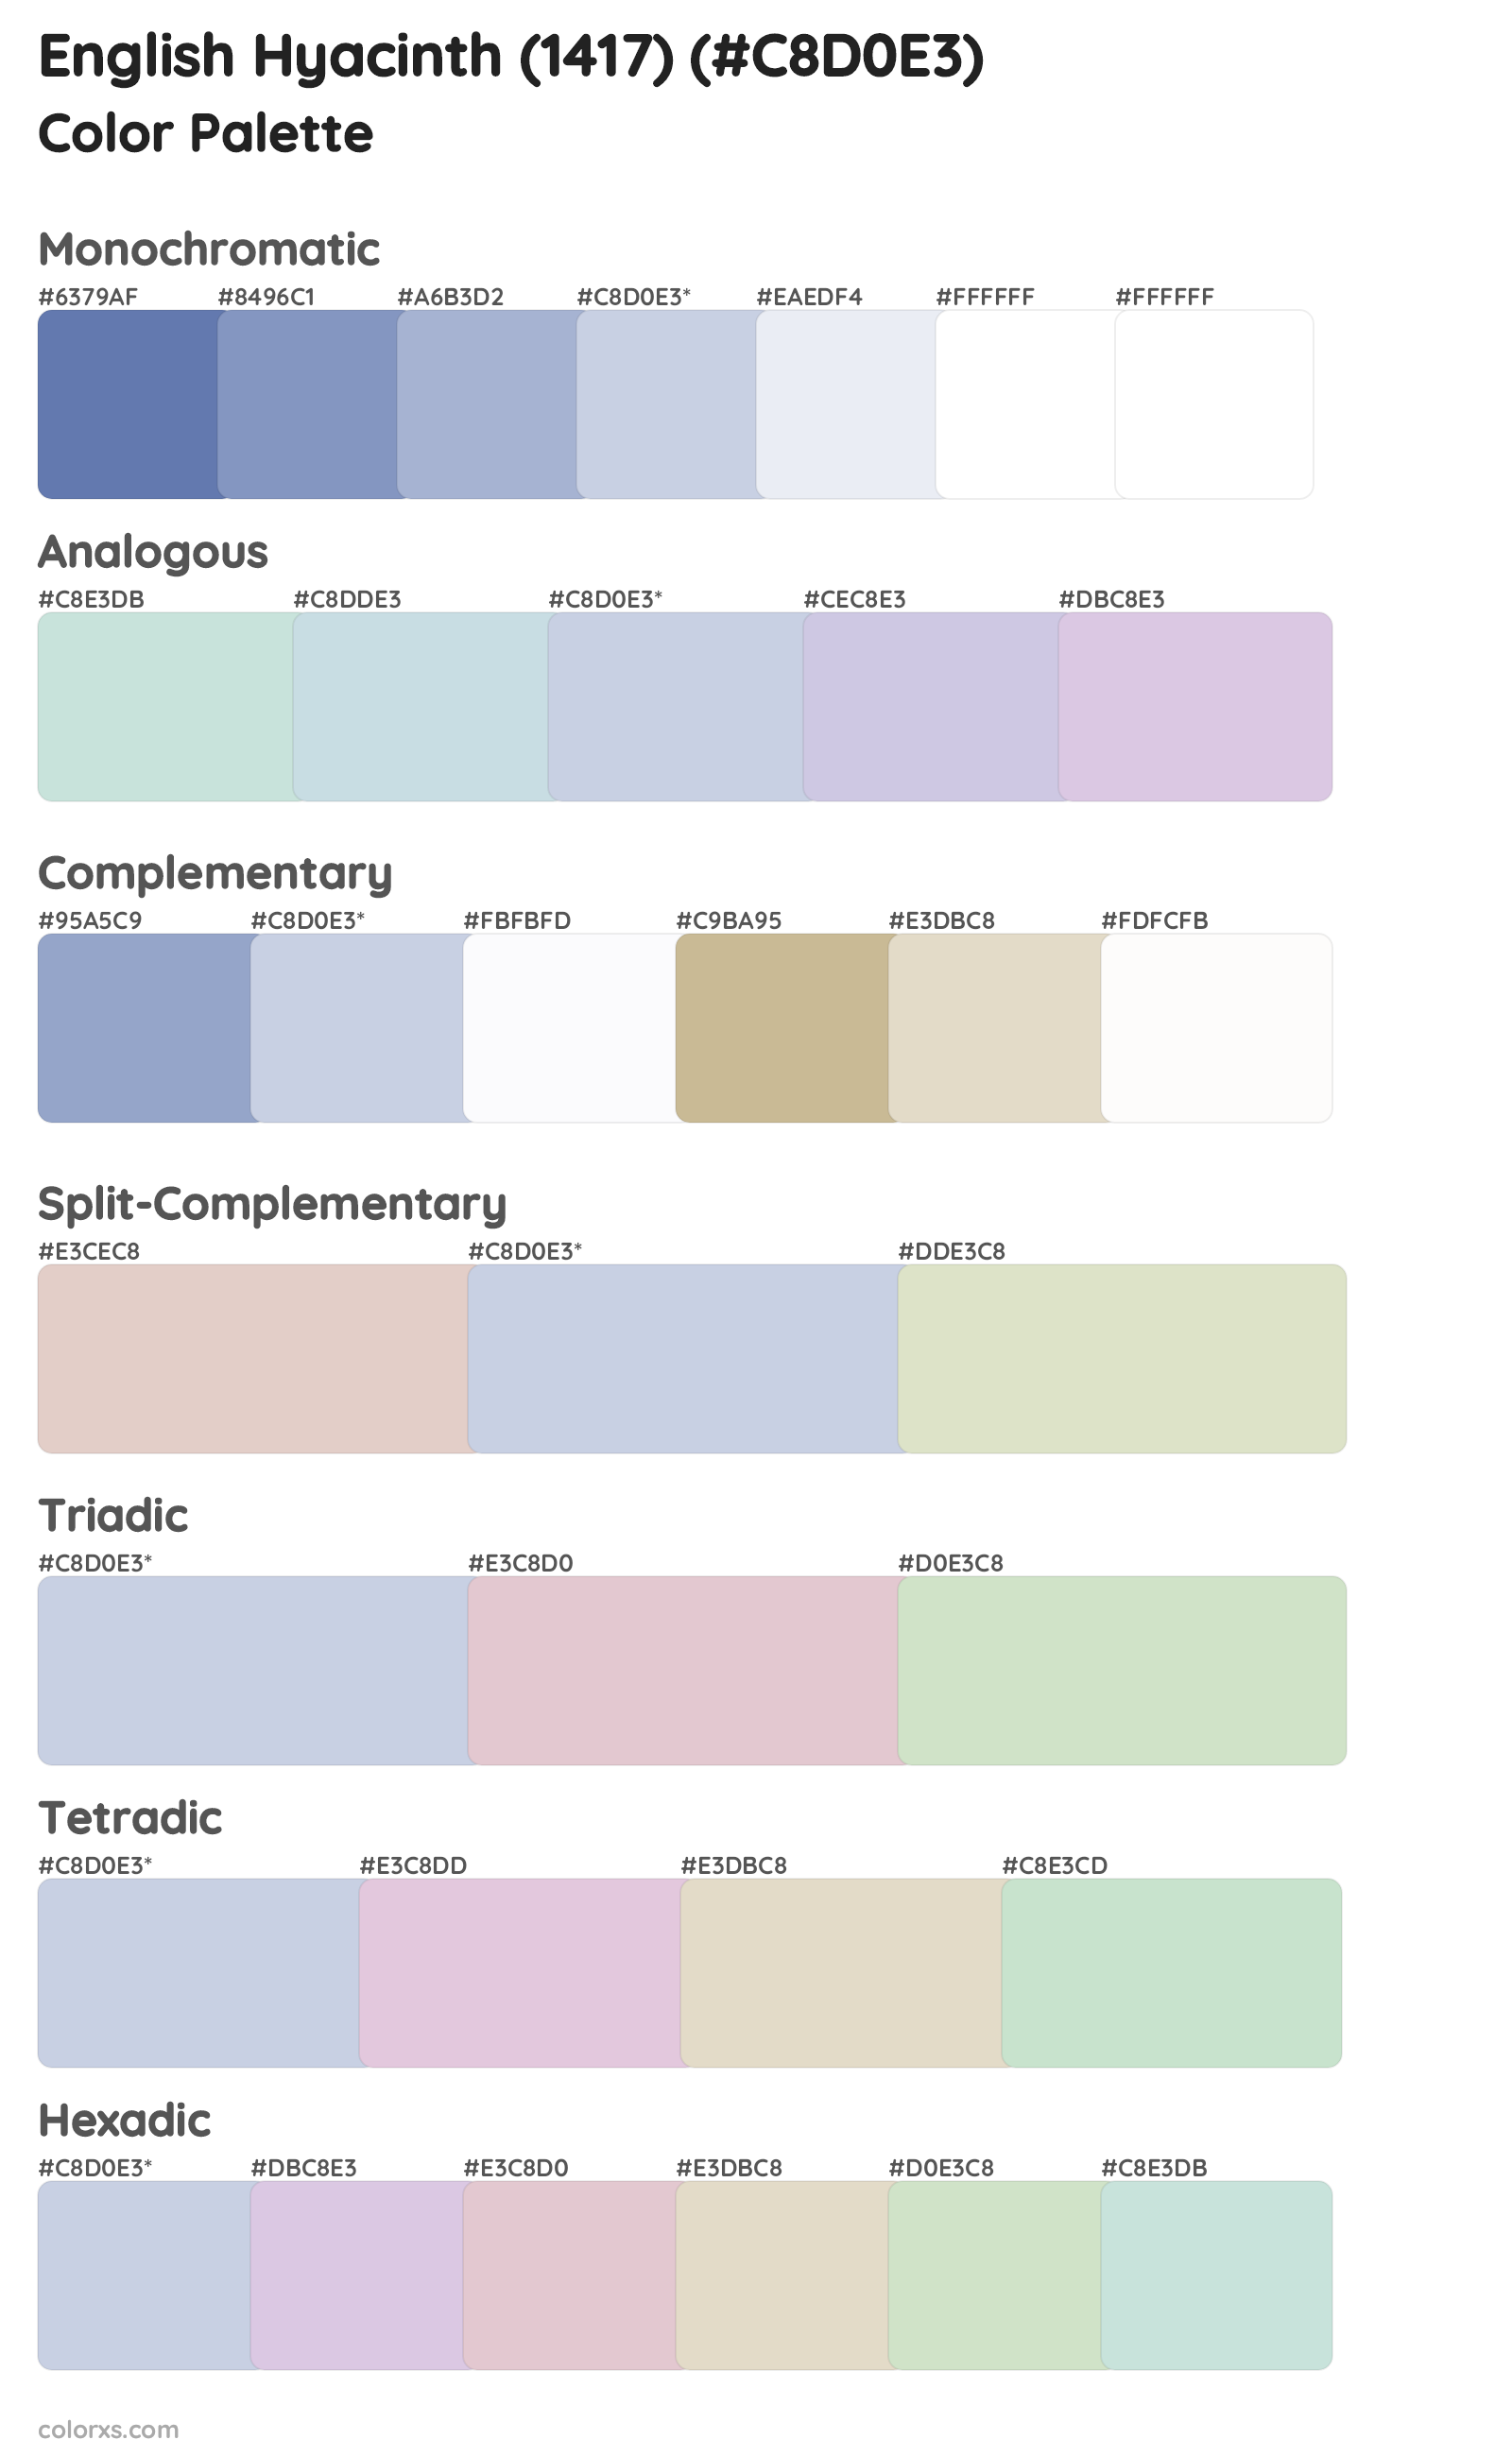 English Hyacinth (1417) Color Scheme Palettes